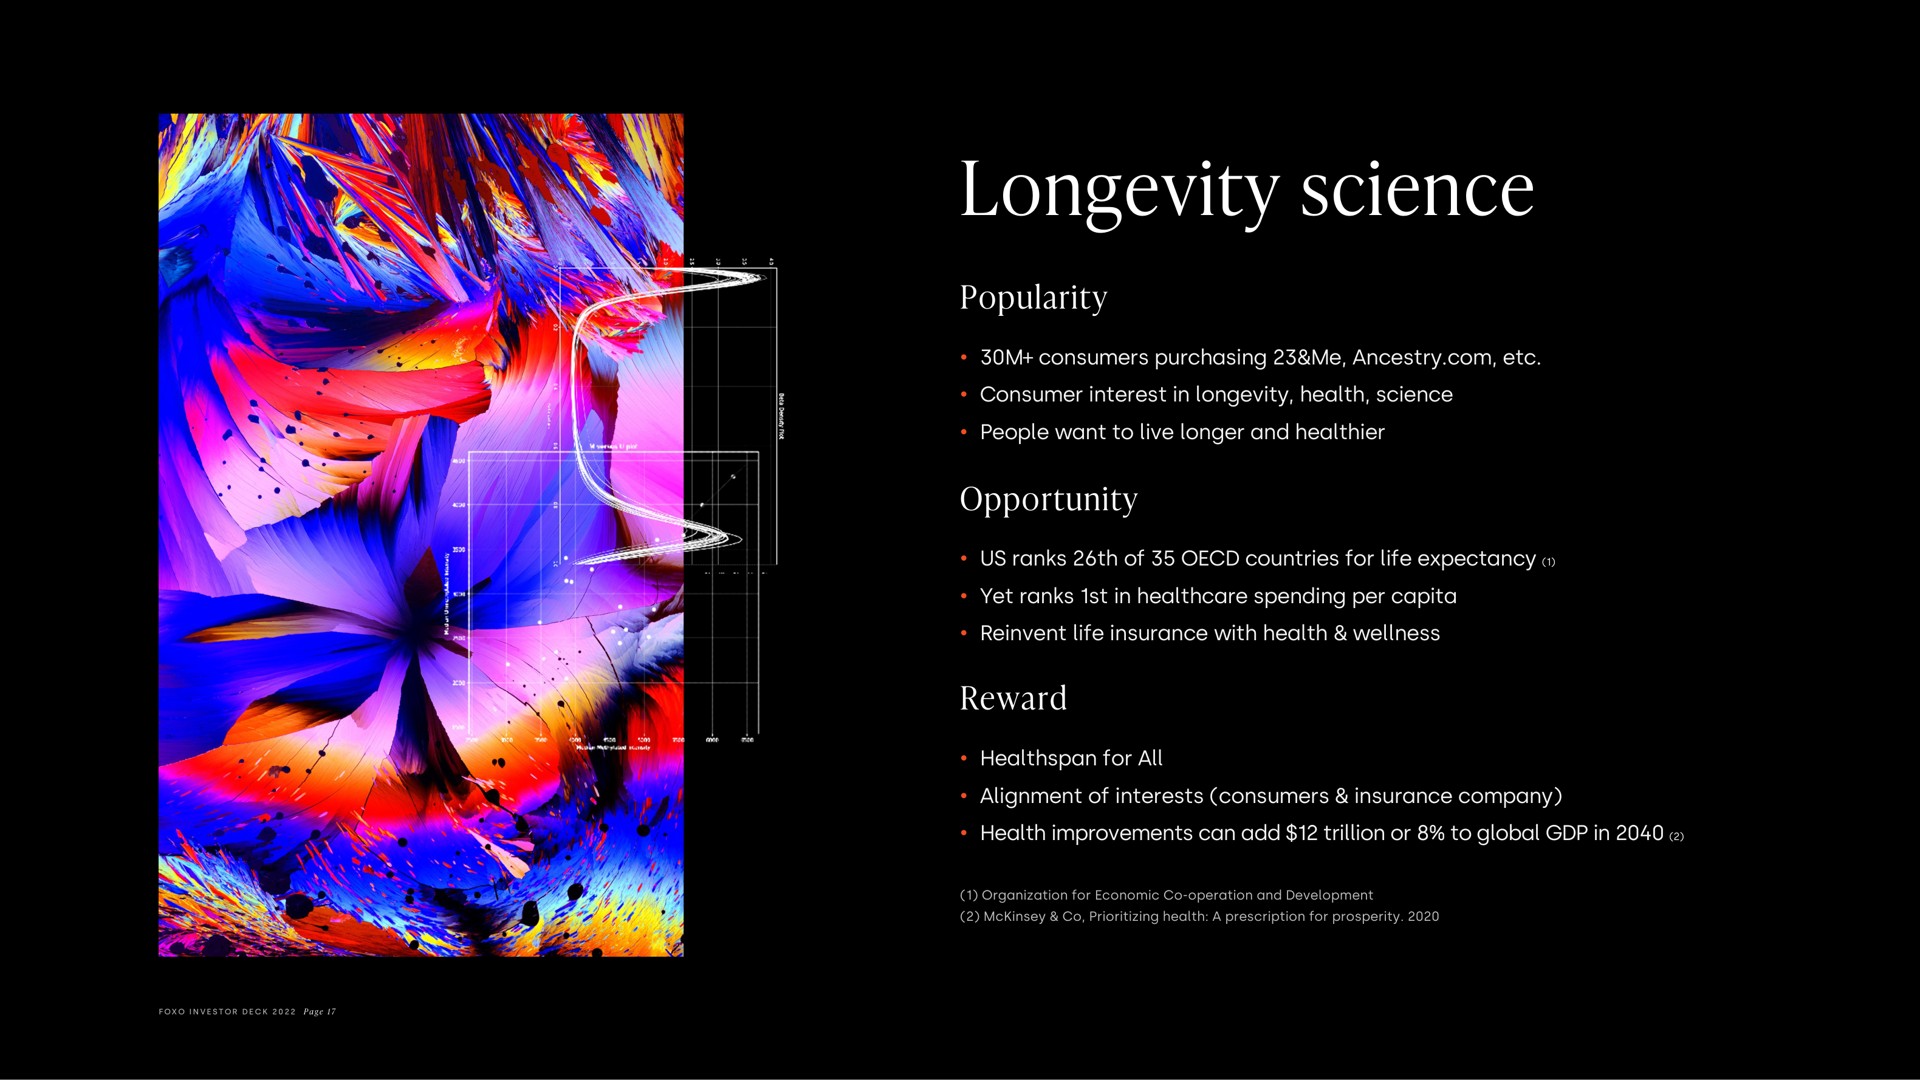 longevity science popularity opportunity reward | Foxo